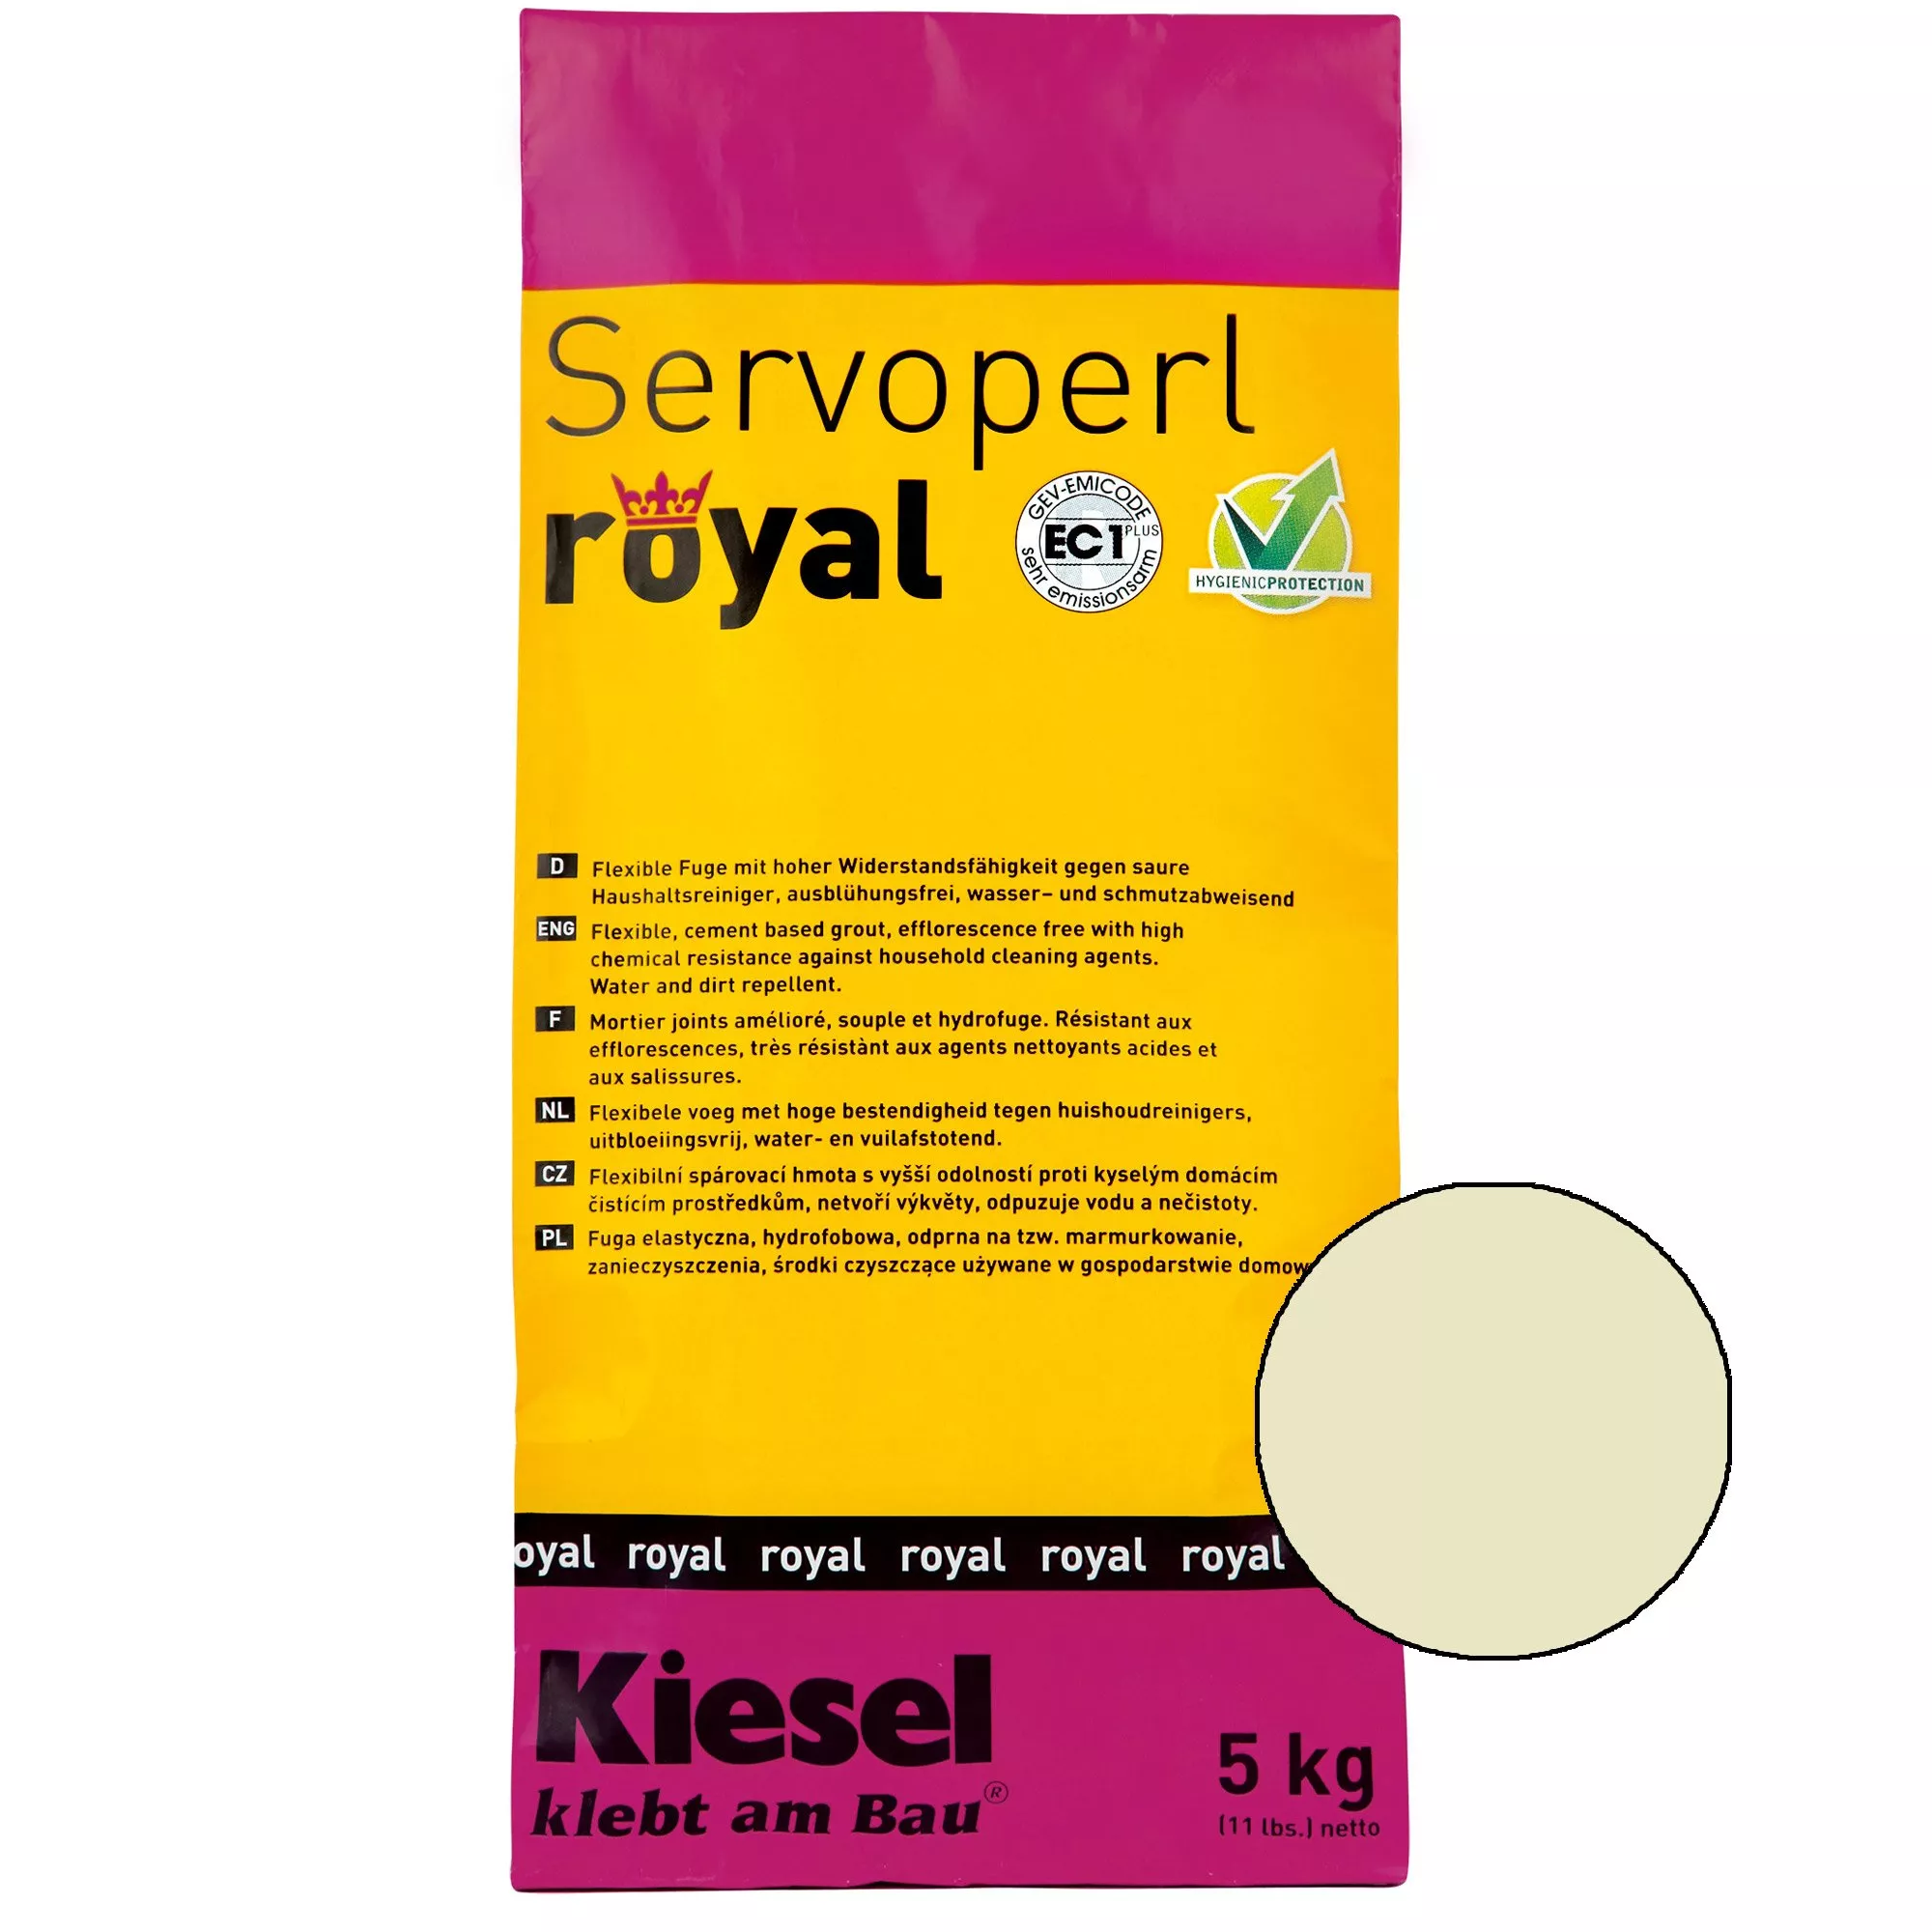 Kiesel Servoperl Royal - Flexibele, Water- En Vuilafstotende Voeg (5KG Jasmin)